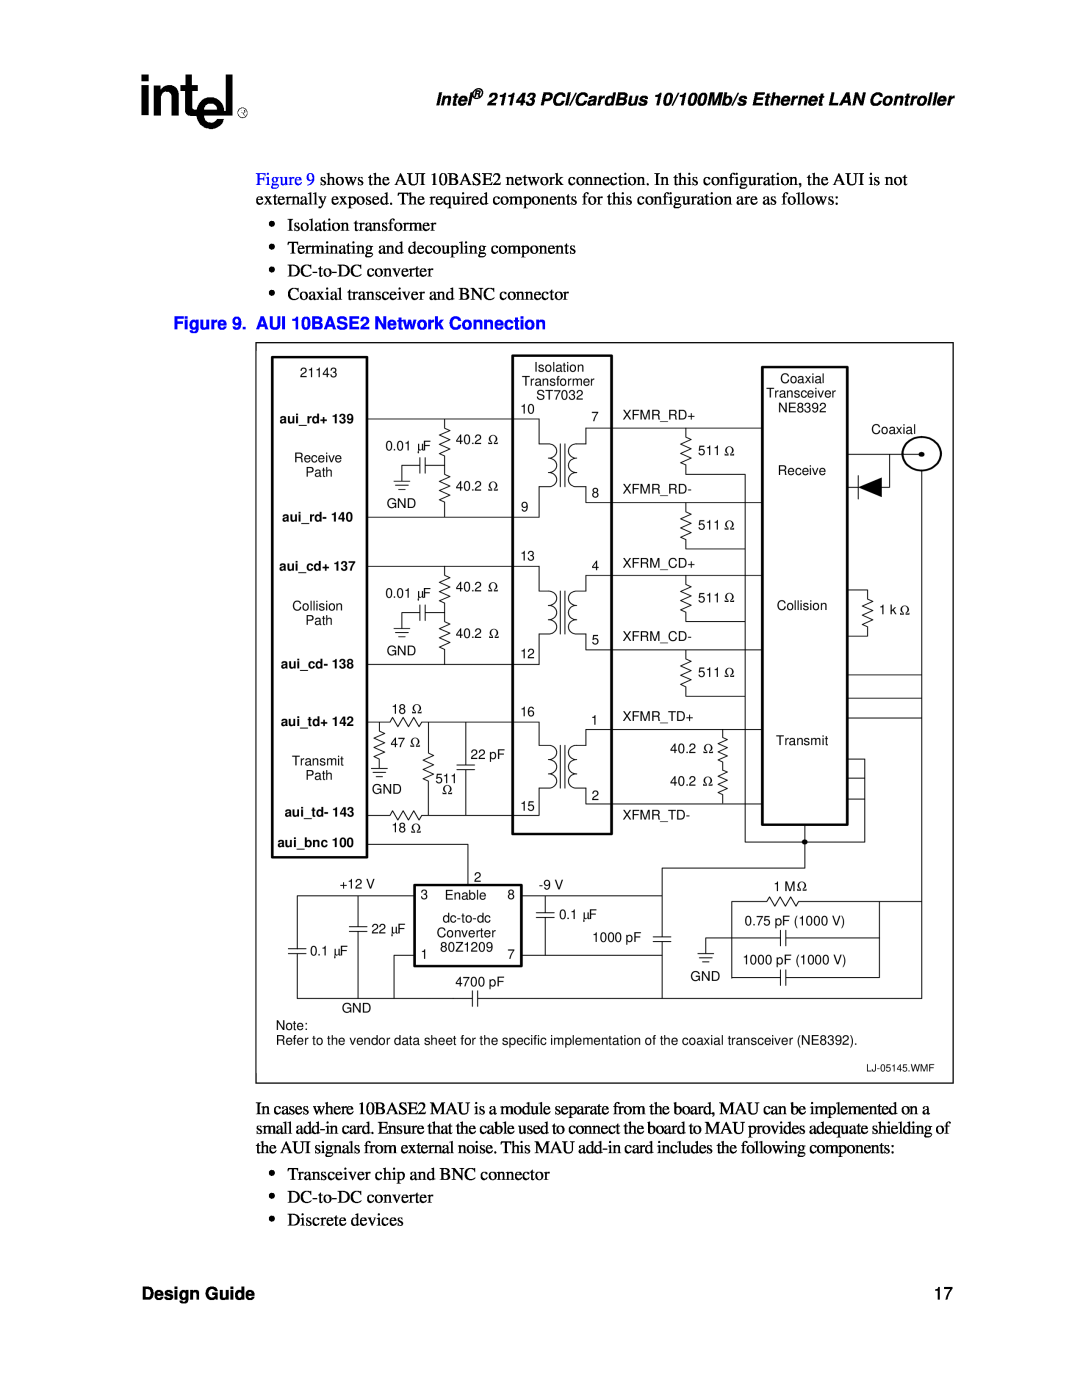 Intel AUI 10BASE2 Network Connection, Intel 21143 PCI/CardBus 10/100Mb/s Ethernet LAN Controller, Design Guide, auitd 